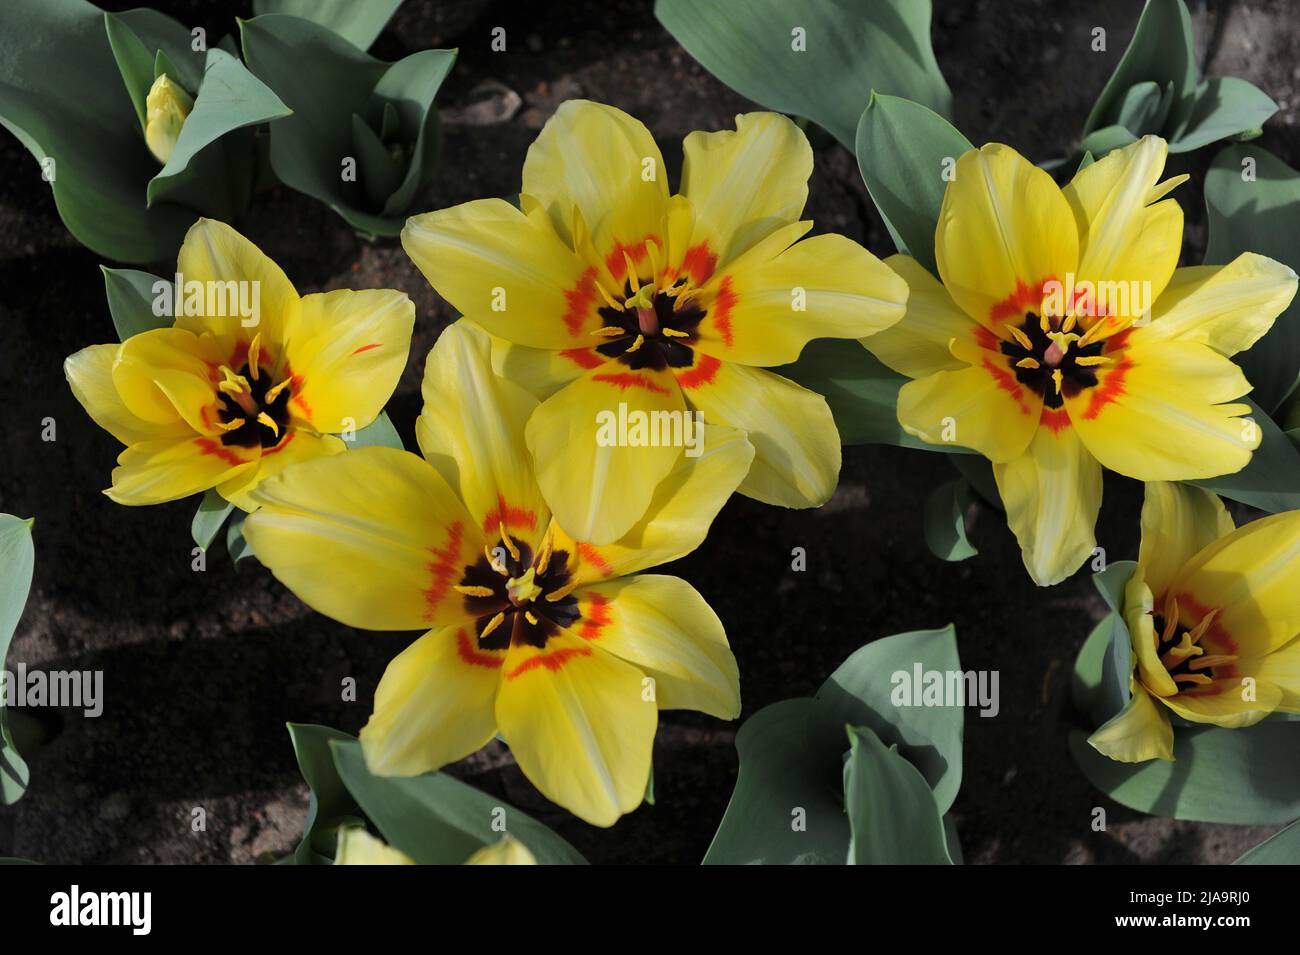 Yellow Fosteriana tulips (Tulipa) Natura Artis Magistra bloom in a garden in April Stock Photo